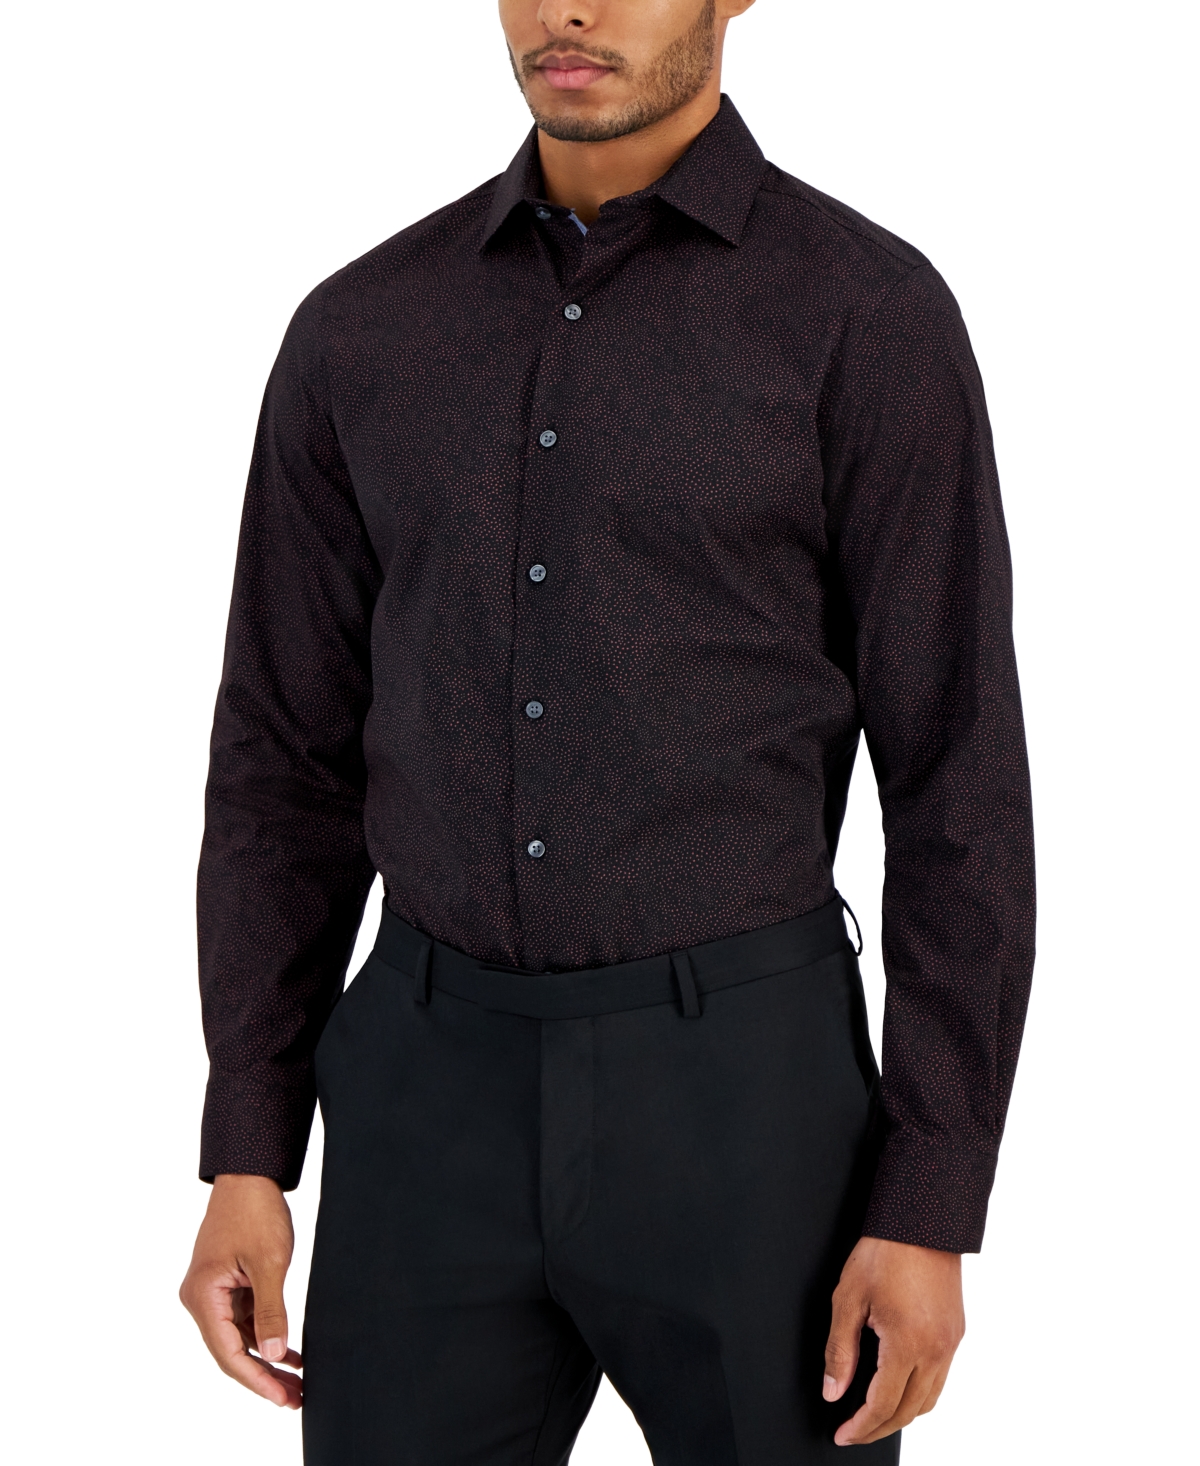 Men's Slim-Fit Dot-Print Dress Shirt, Created for Macy's - Black Red